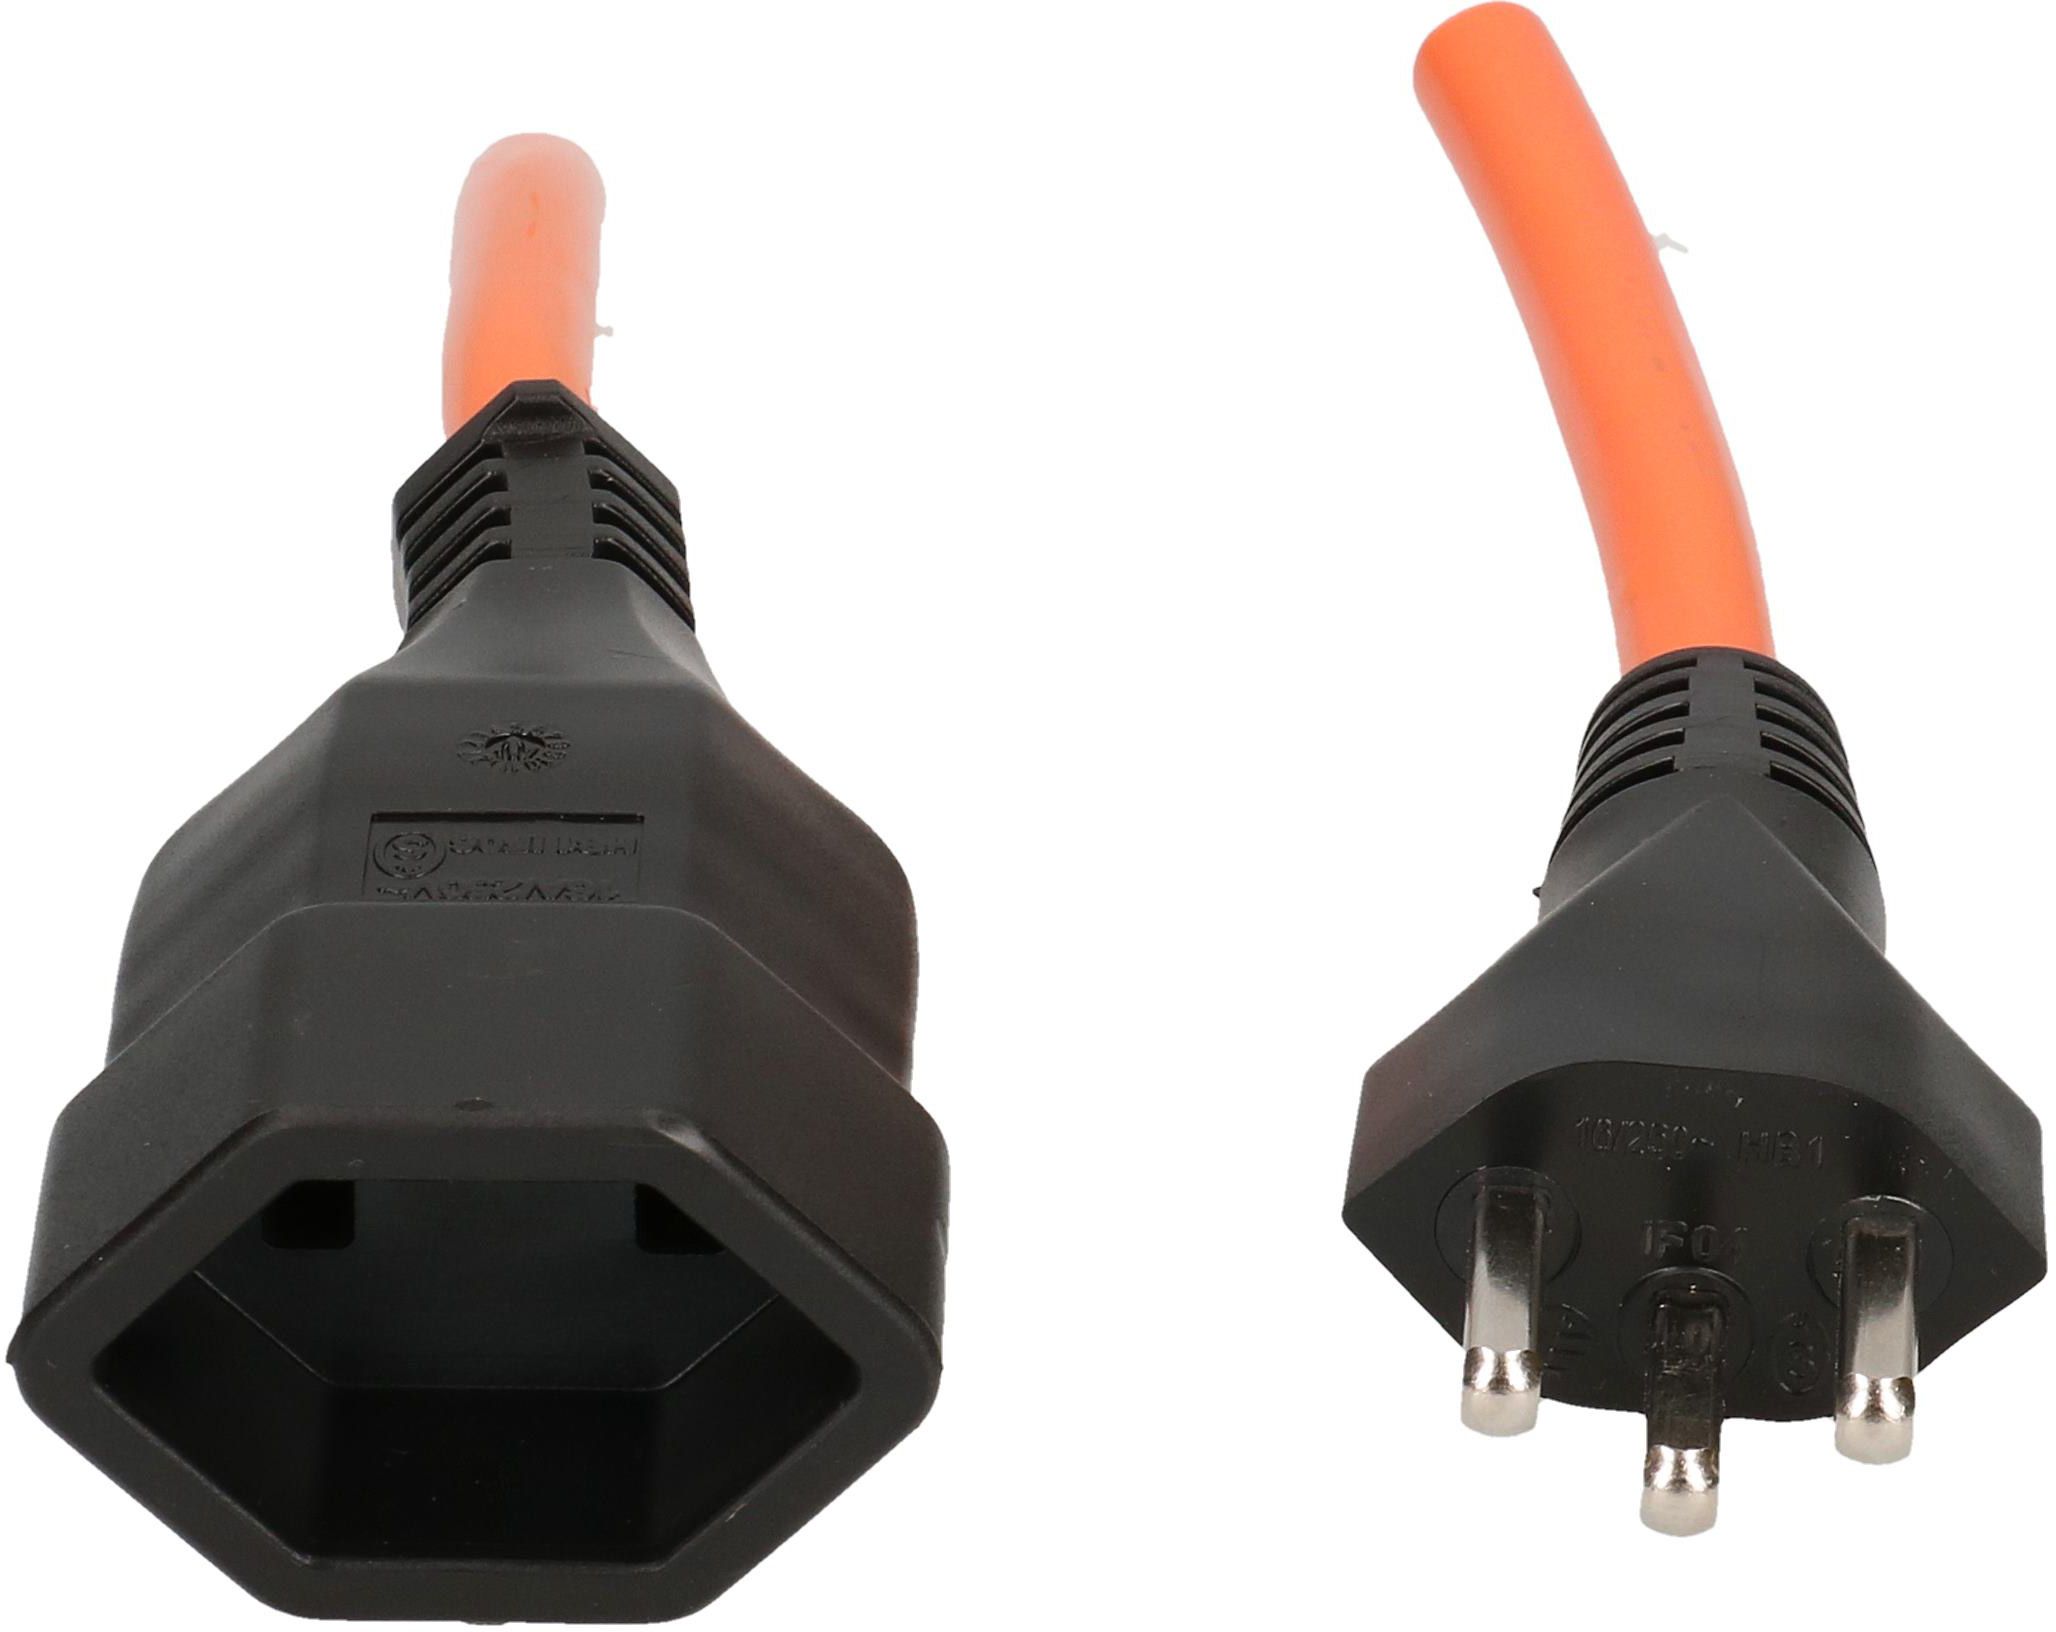 Extension cable cordset H07BQ-F3G1,5mm2 orange